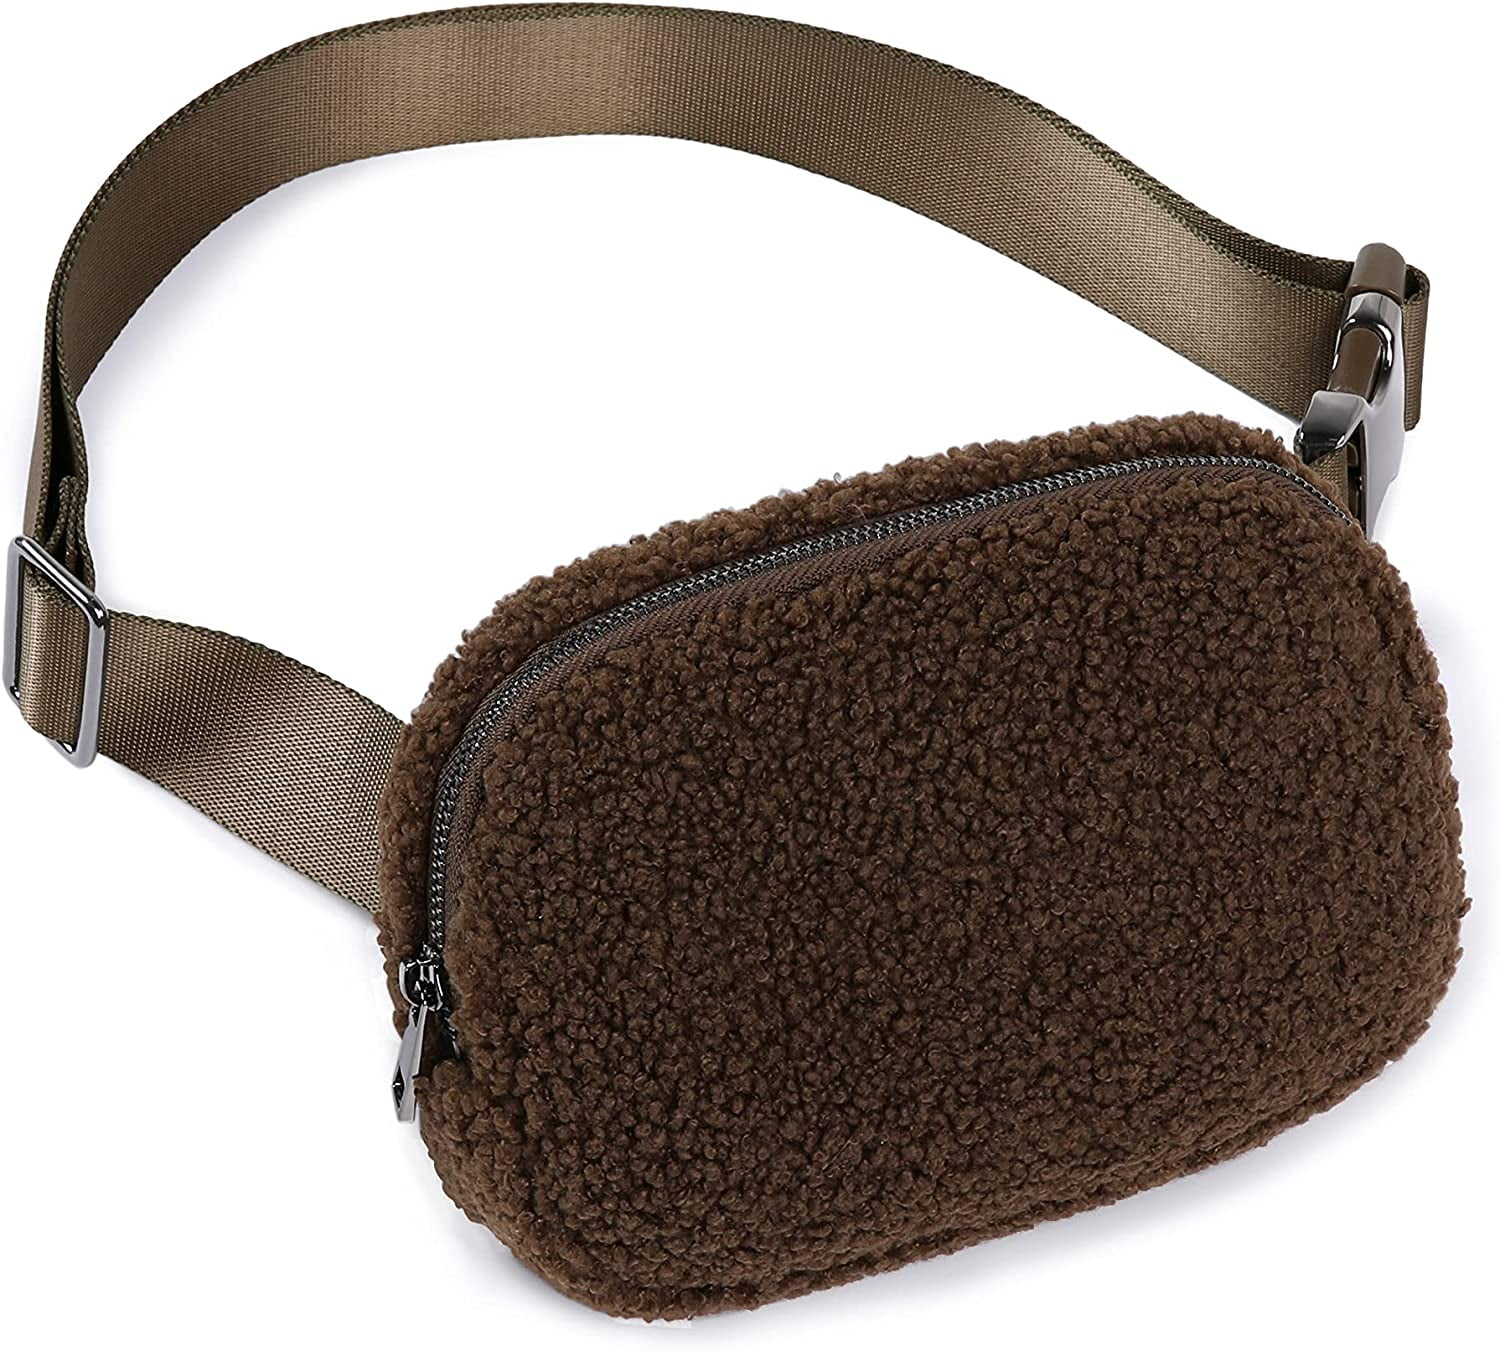 ODODOS Fleece Mini Belt Bag with Adjustable Strap